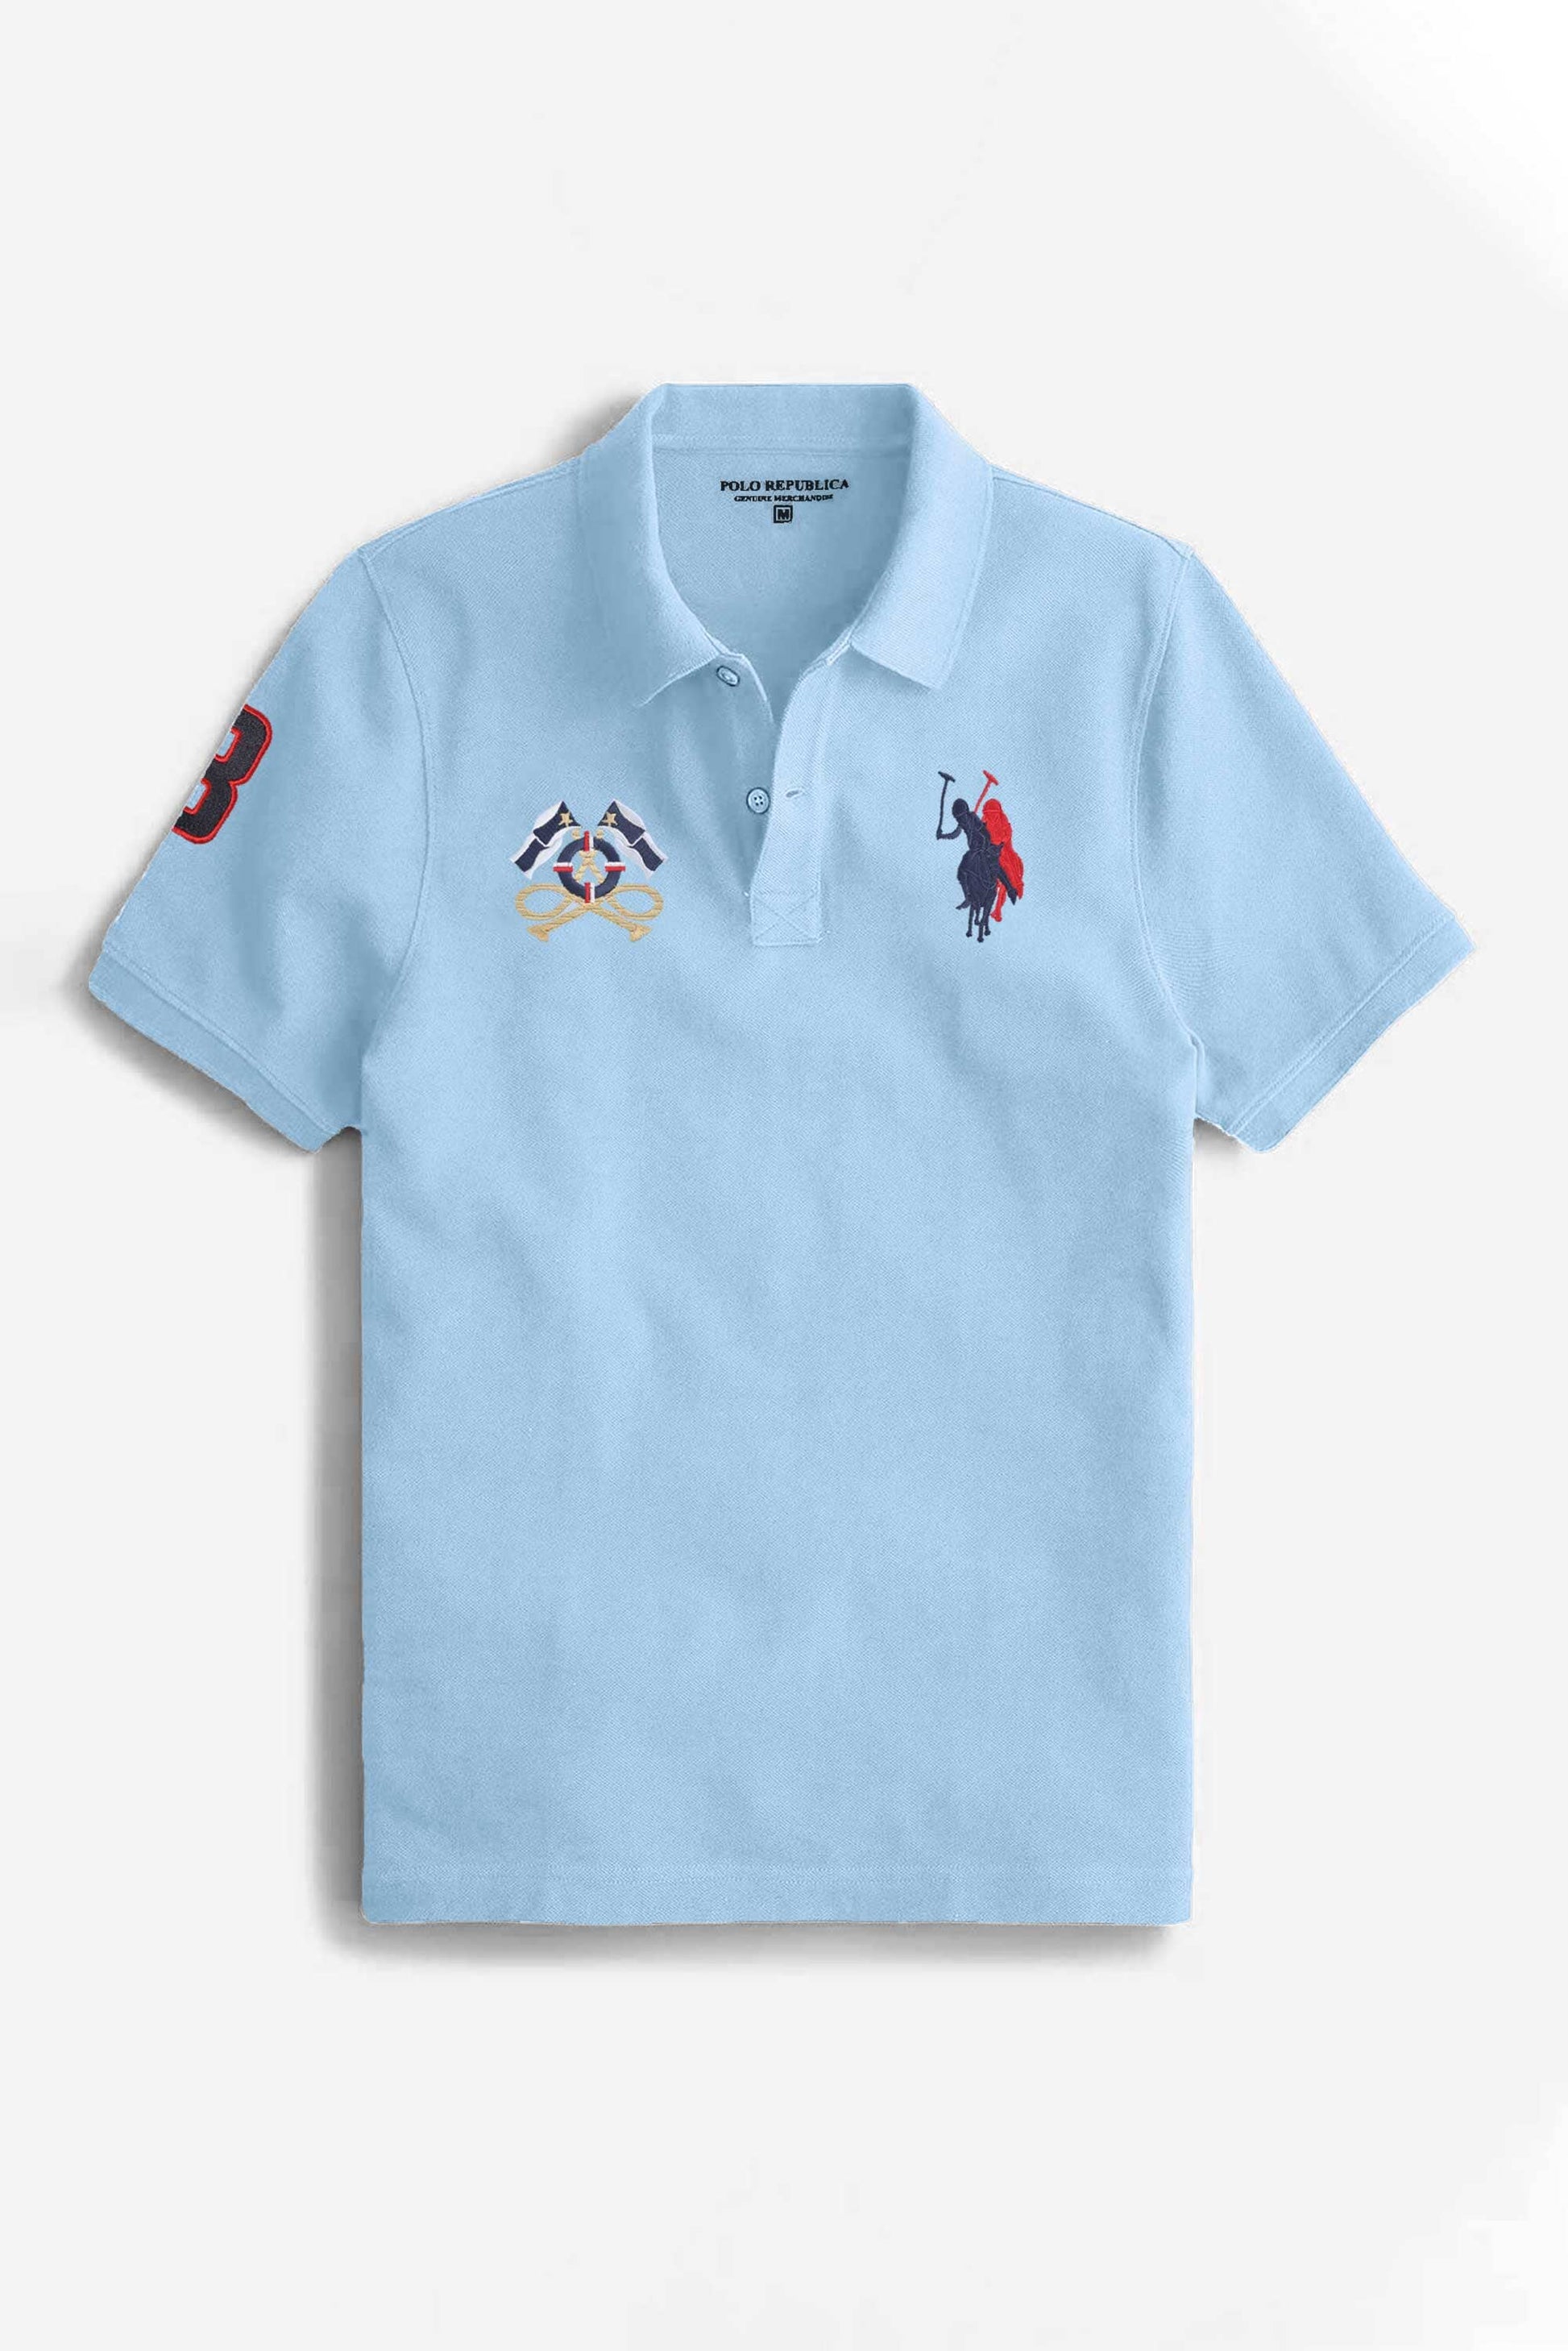 Polo Republica Men's Double Horse Rider & Flag Crest Embroidered Short Sleeve Polo Shirt Men's Polo Shirt Polo Republica 